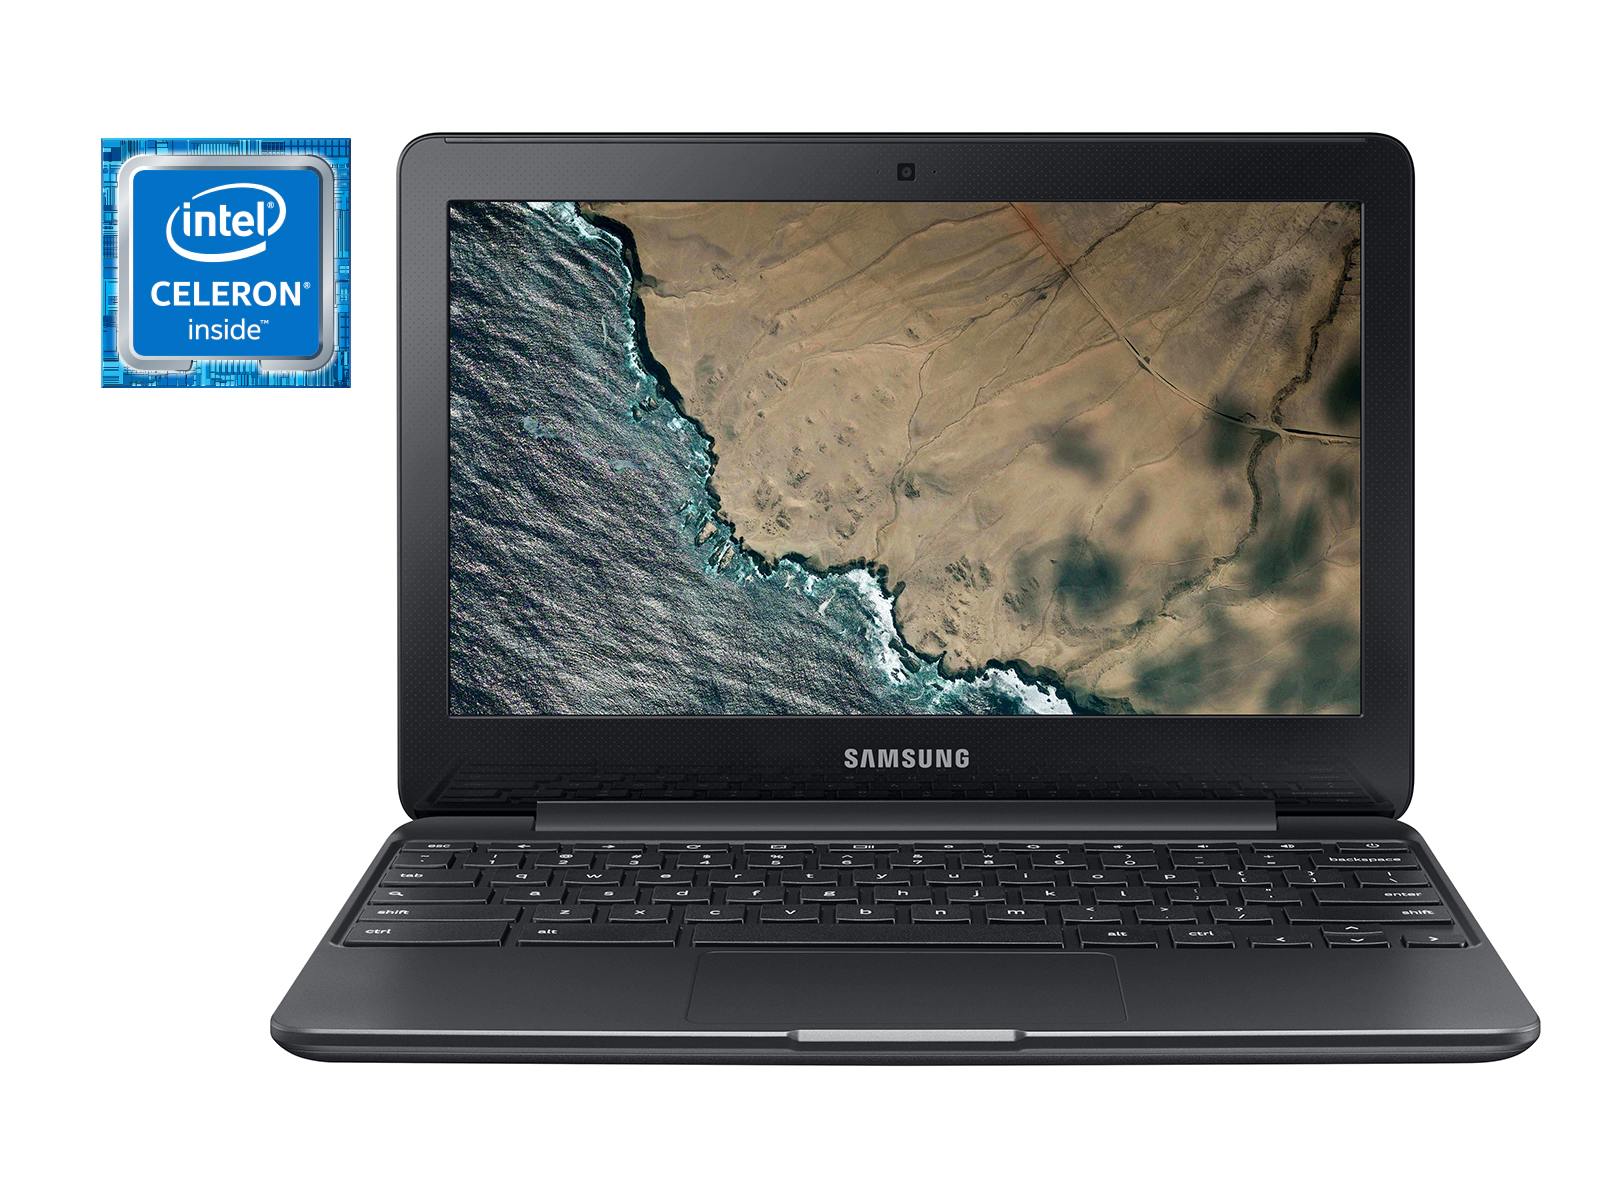 SAMSUNG 11.6" Chromebook 3, Intel Celeron N3060, 4GB RAM, 16GB eMMC, Metallic Black - XE500C13-K04US (Google Classroom Ready) - image 1 of 9